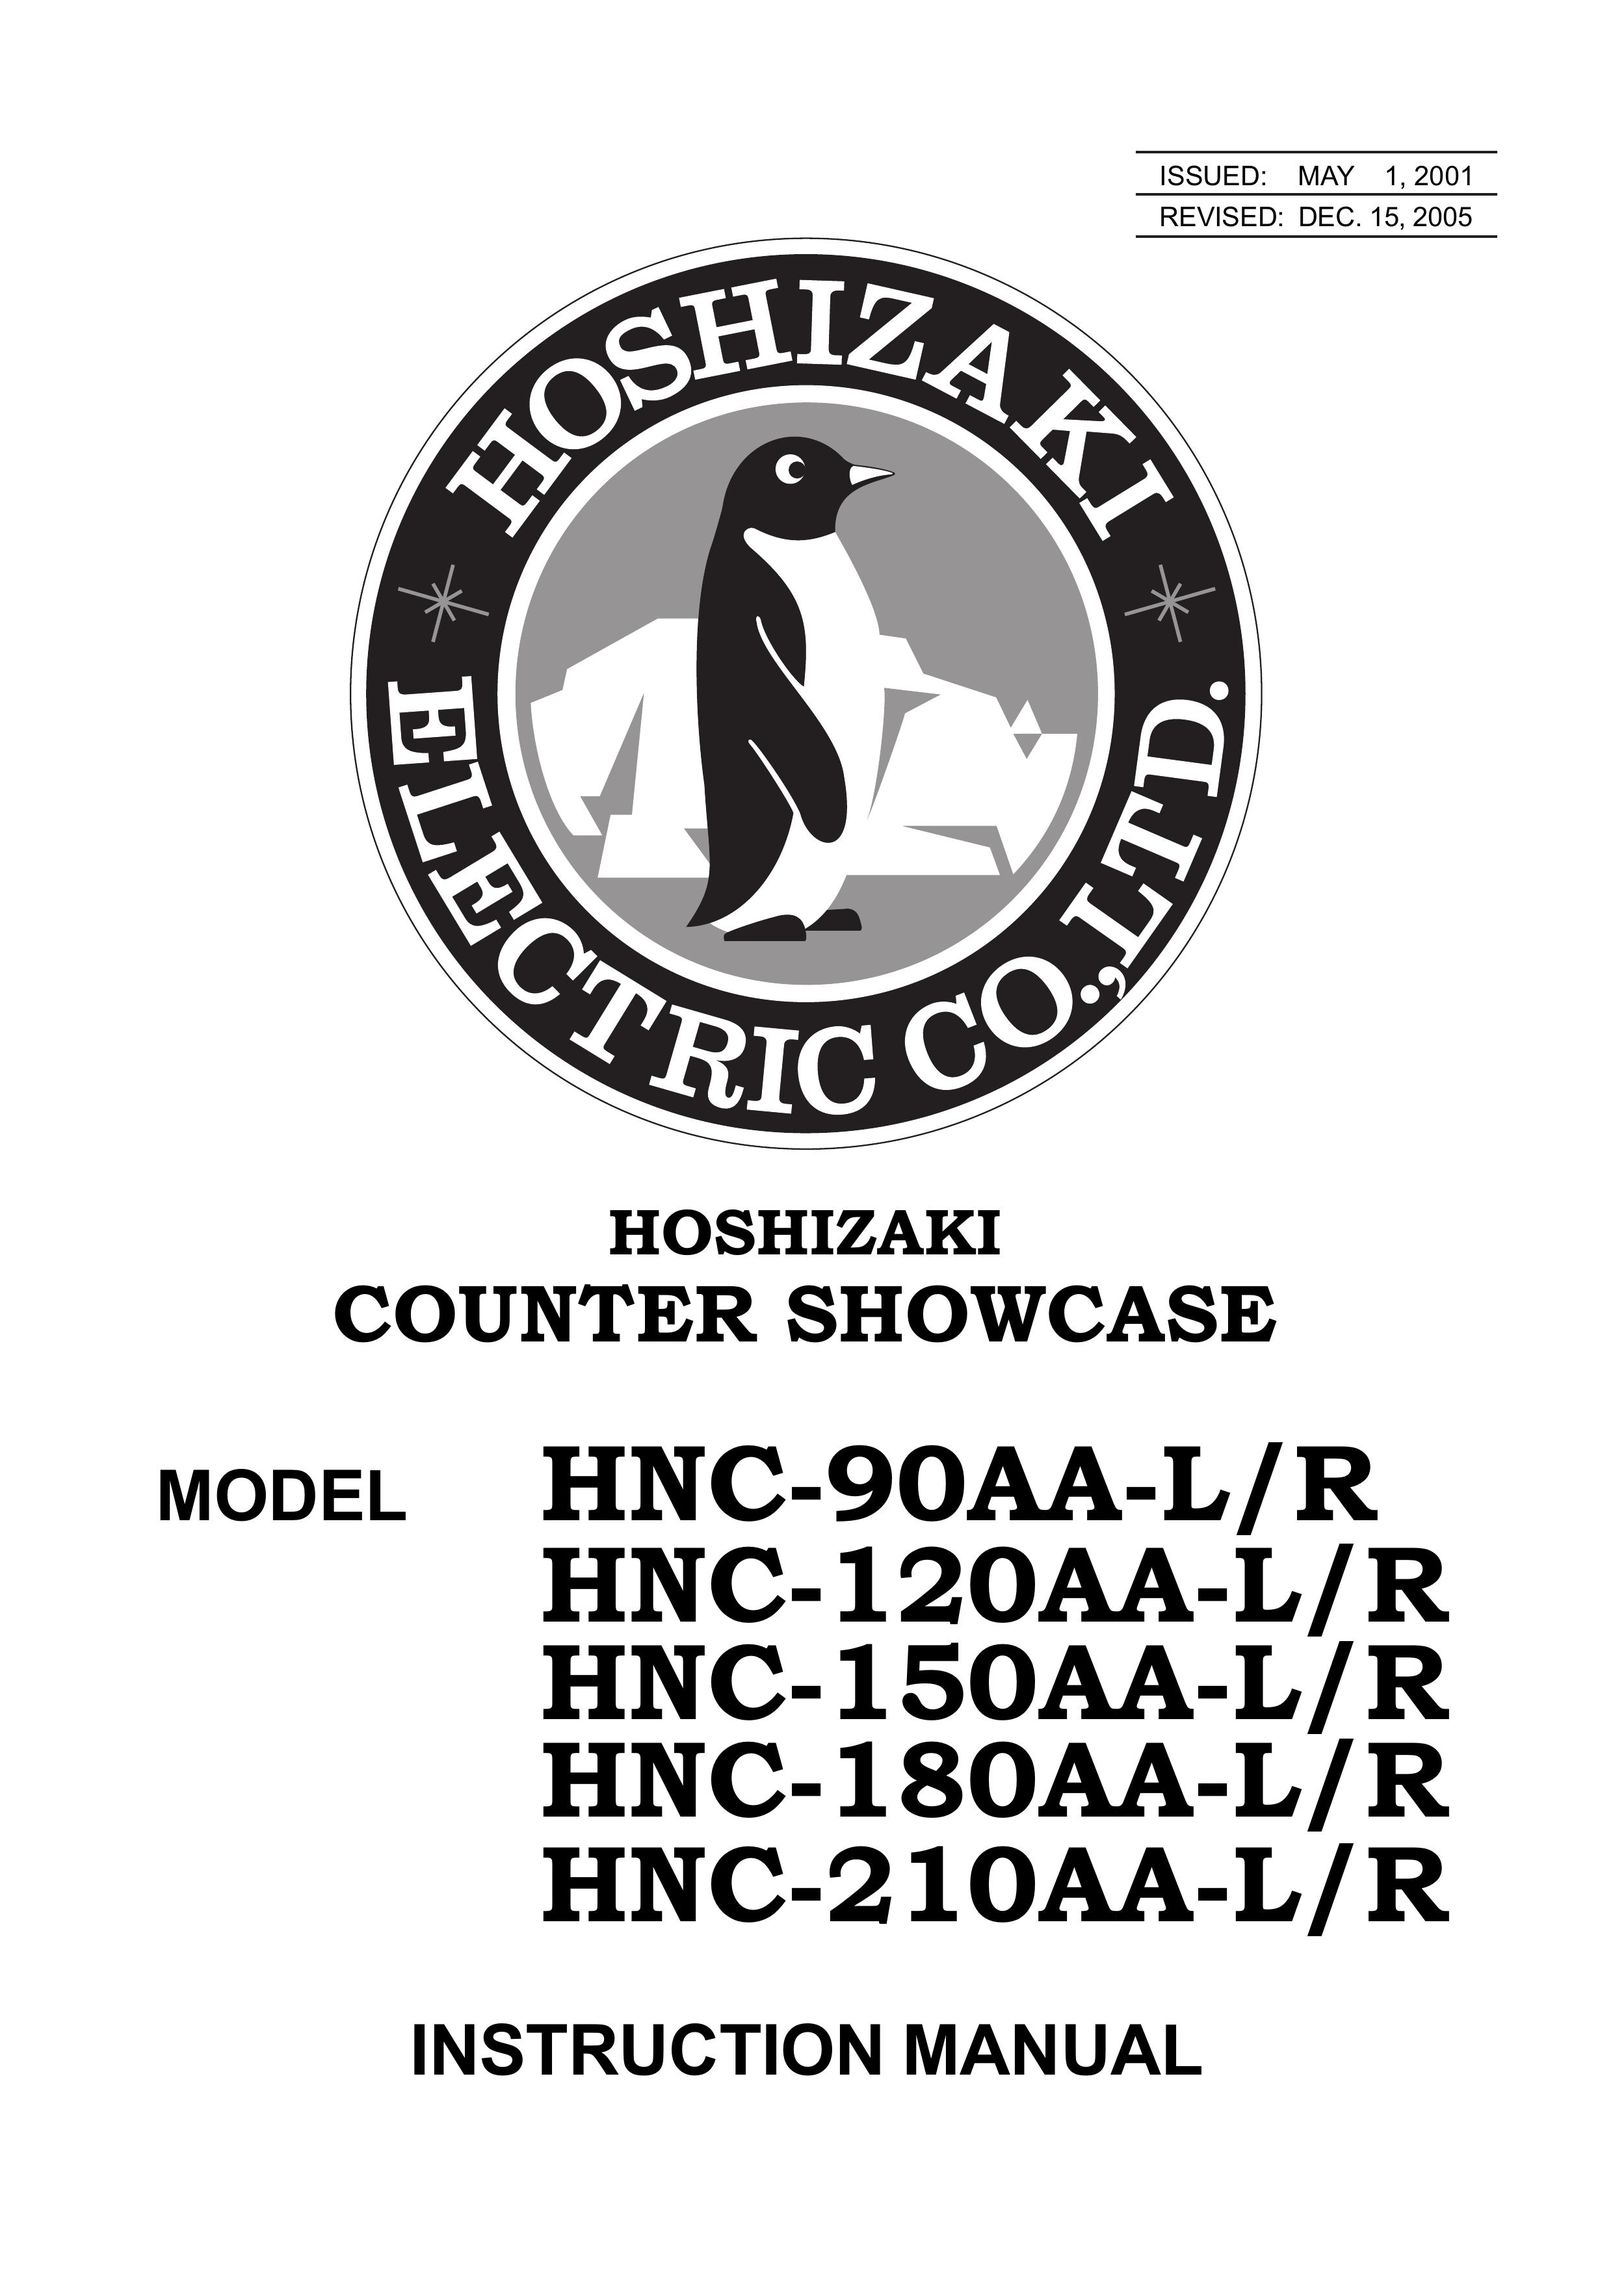 Hoshizaki HNC-180AA-L/R Freezer User Manual